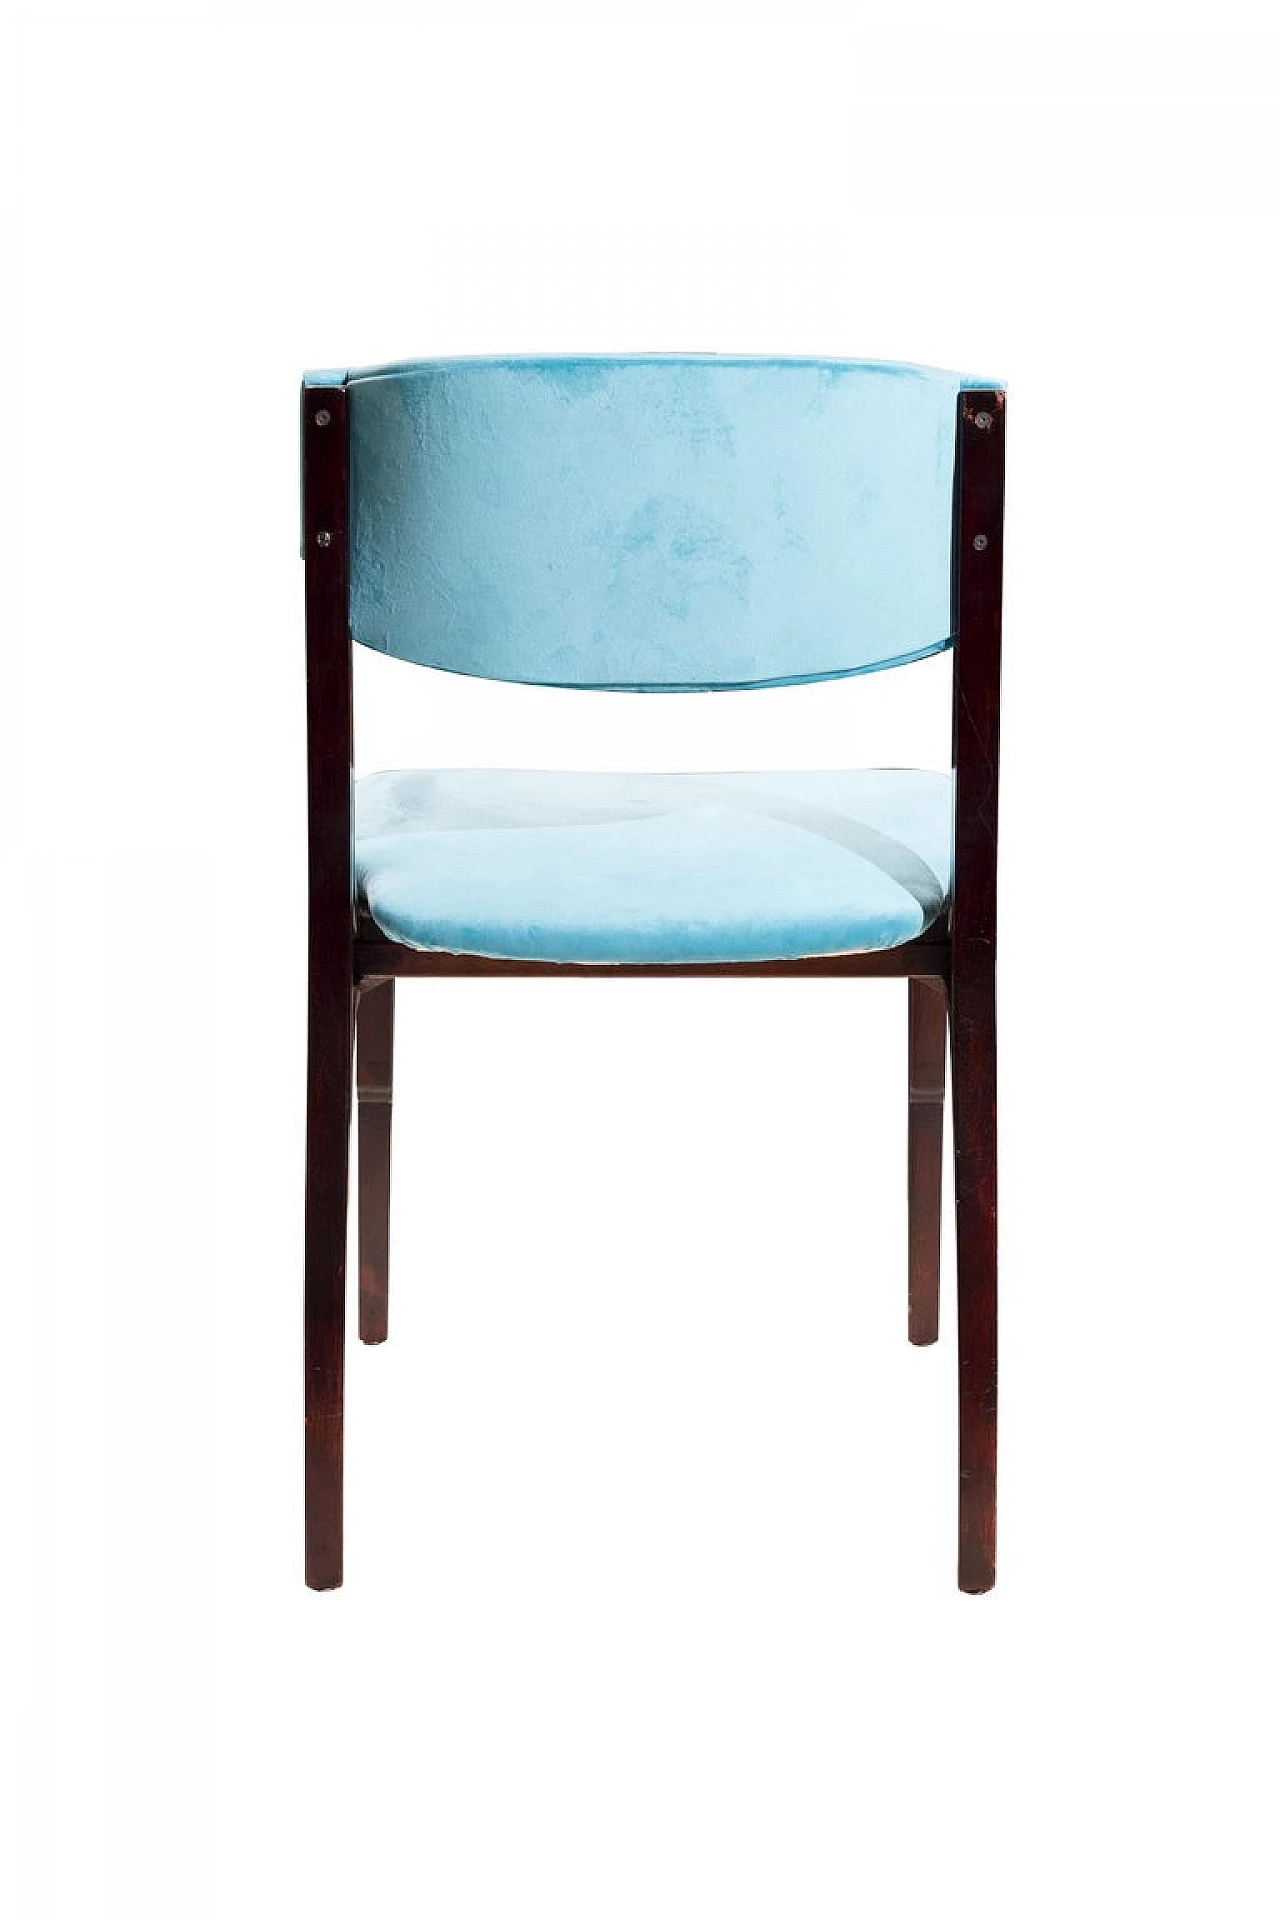 5 Chairs by Gianfranco Frattini for Cantieri Carugati, 1960s 4